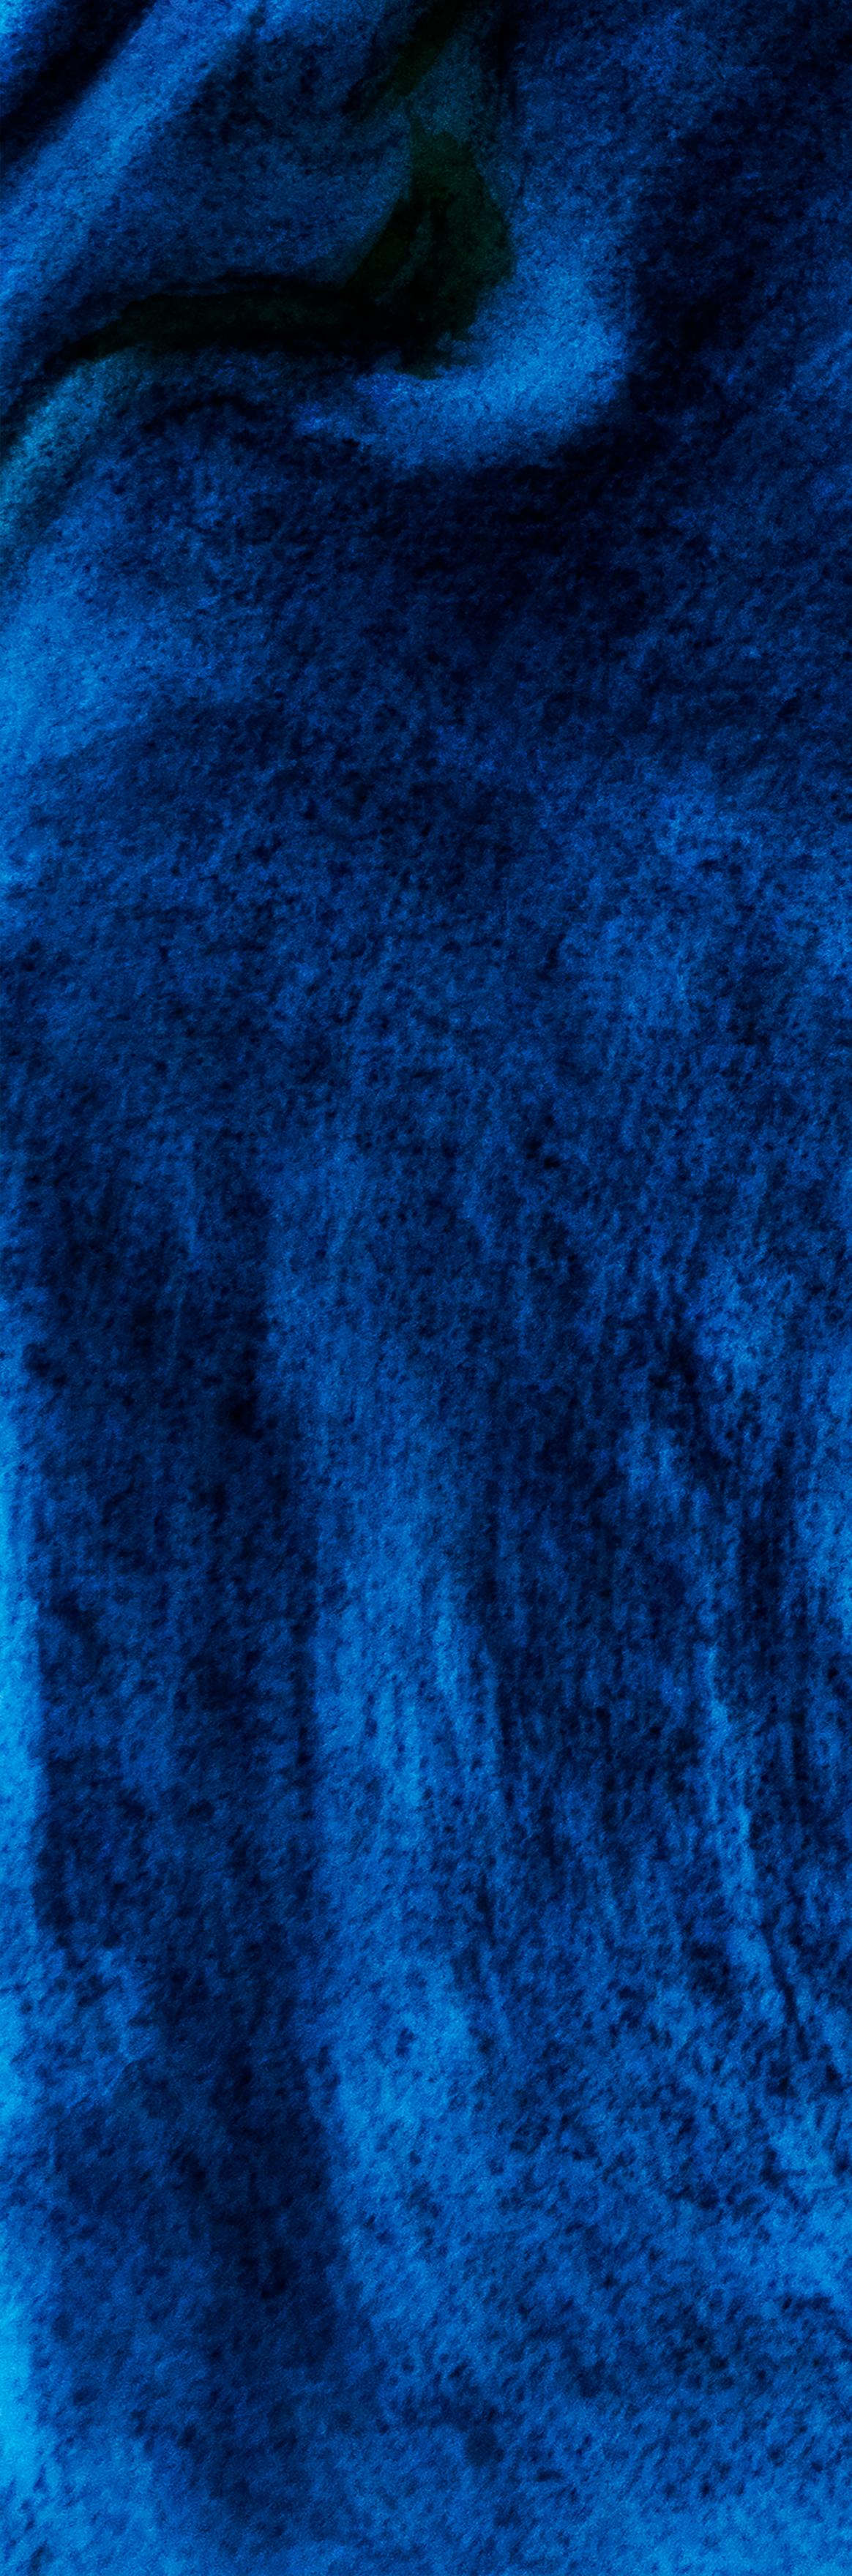 El sueño azul - Abstract Print by Sonja H. Lukenic